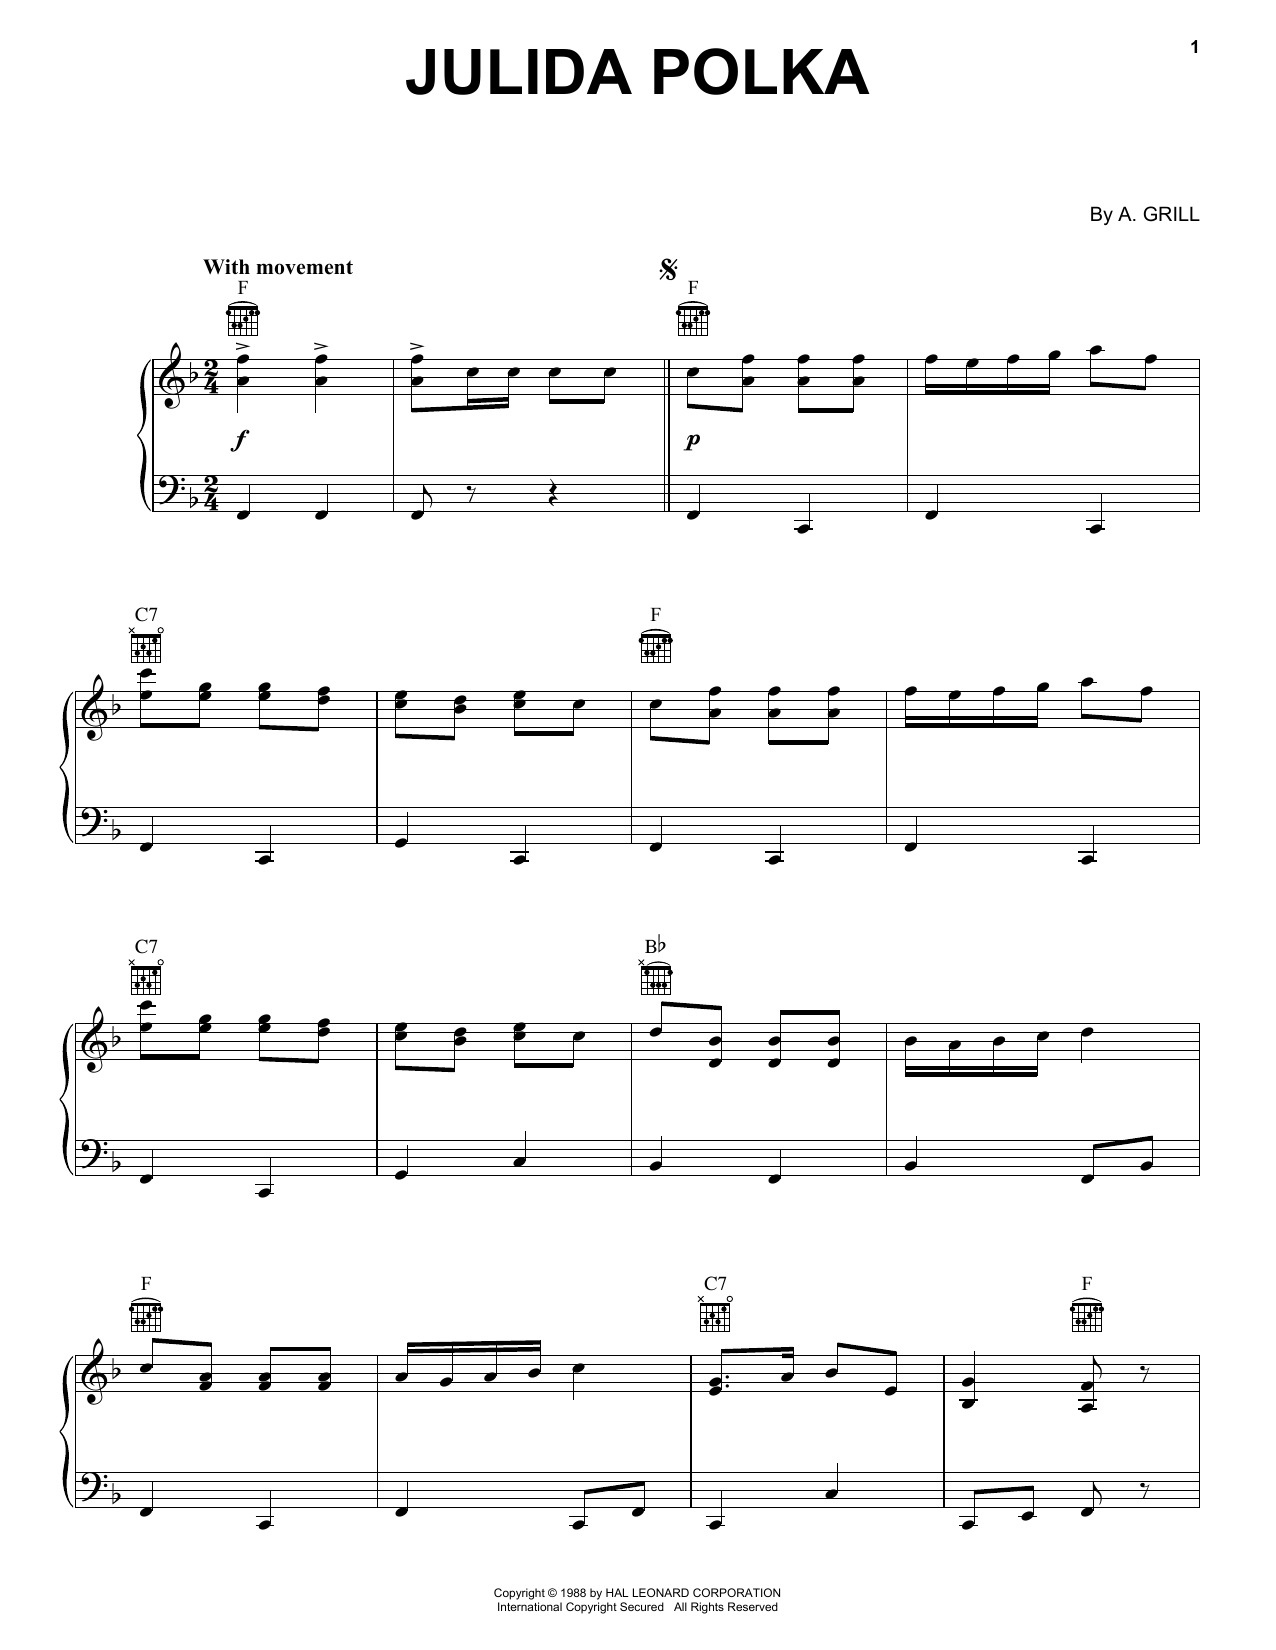 A. Grill Julida Polka Sheet Music Notes & Chords for Piano - Download or Print PDF